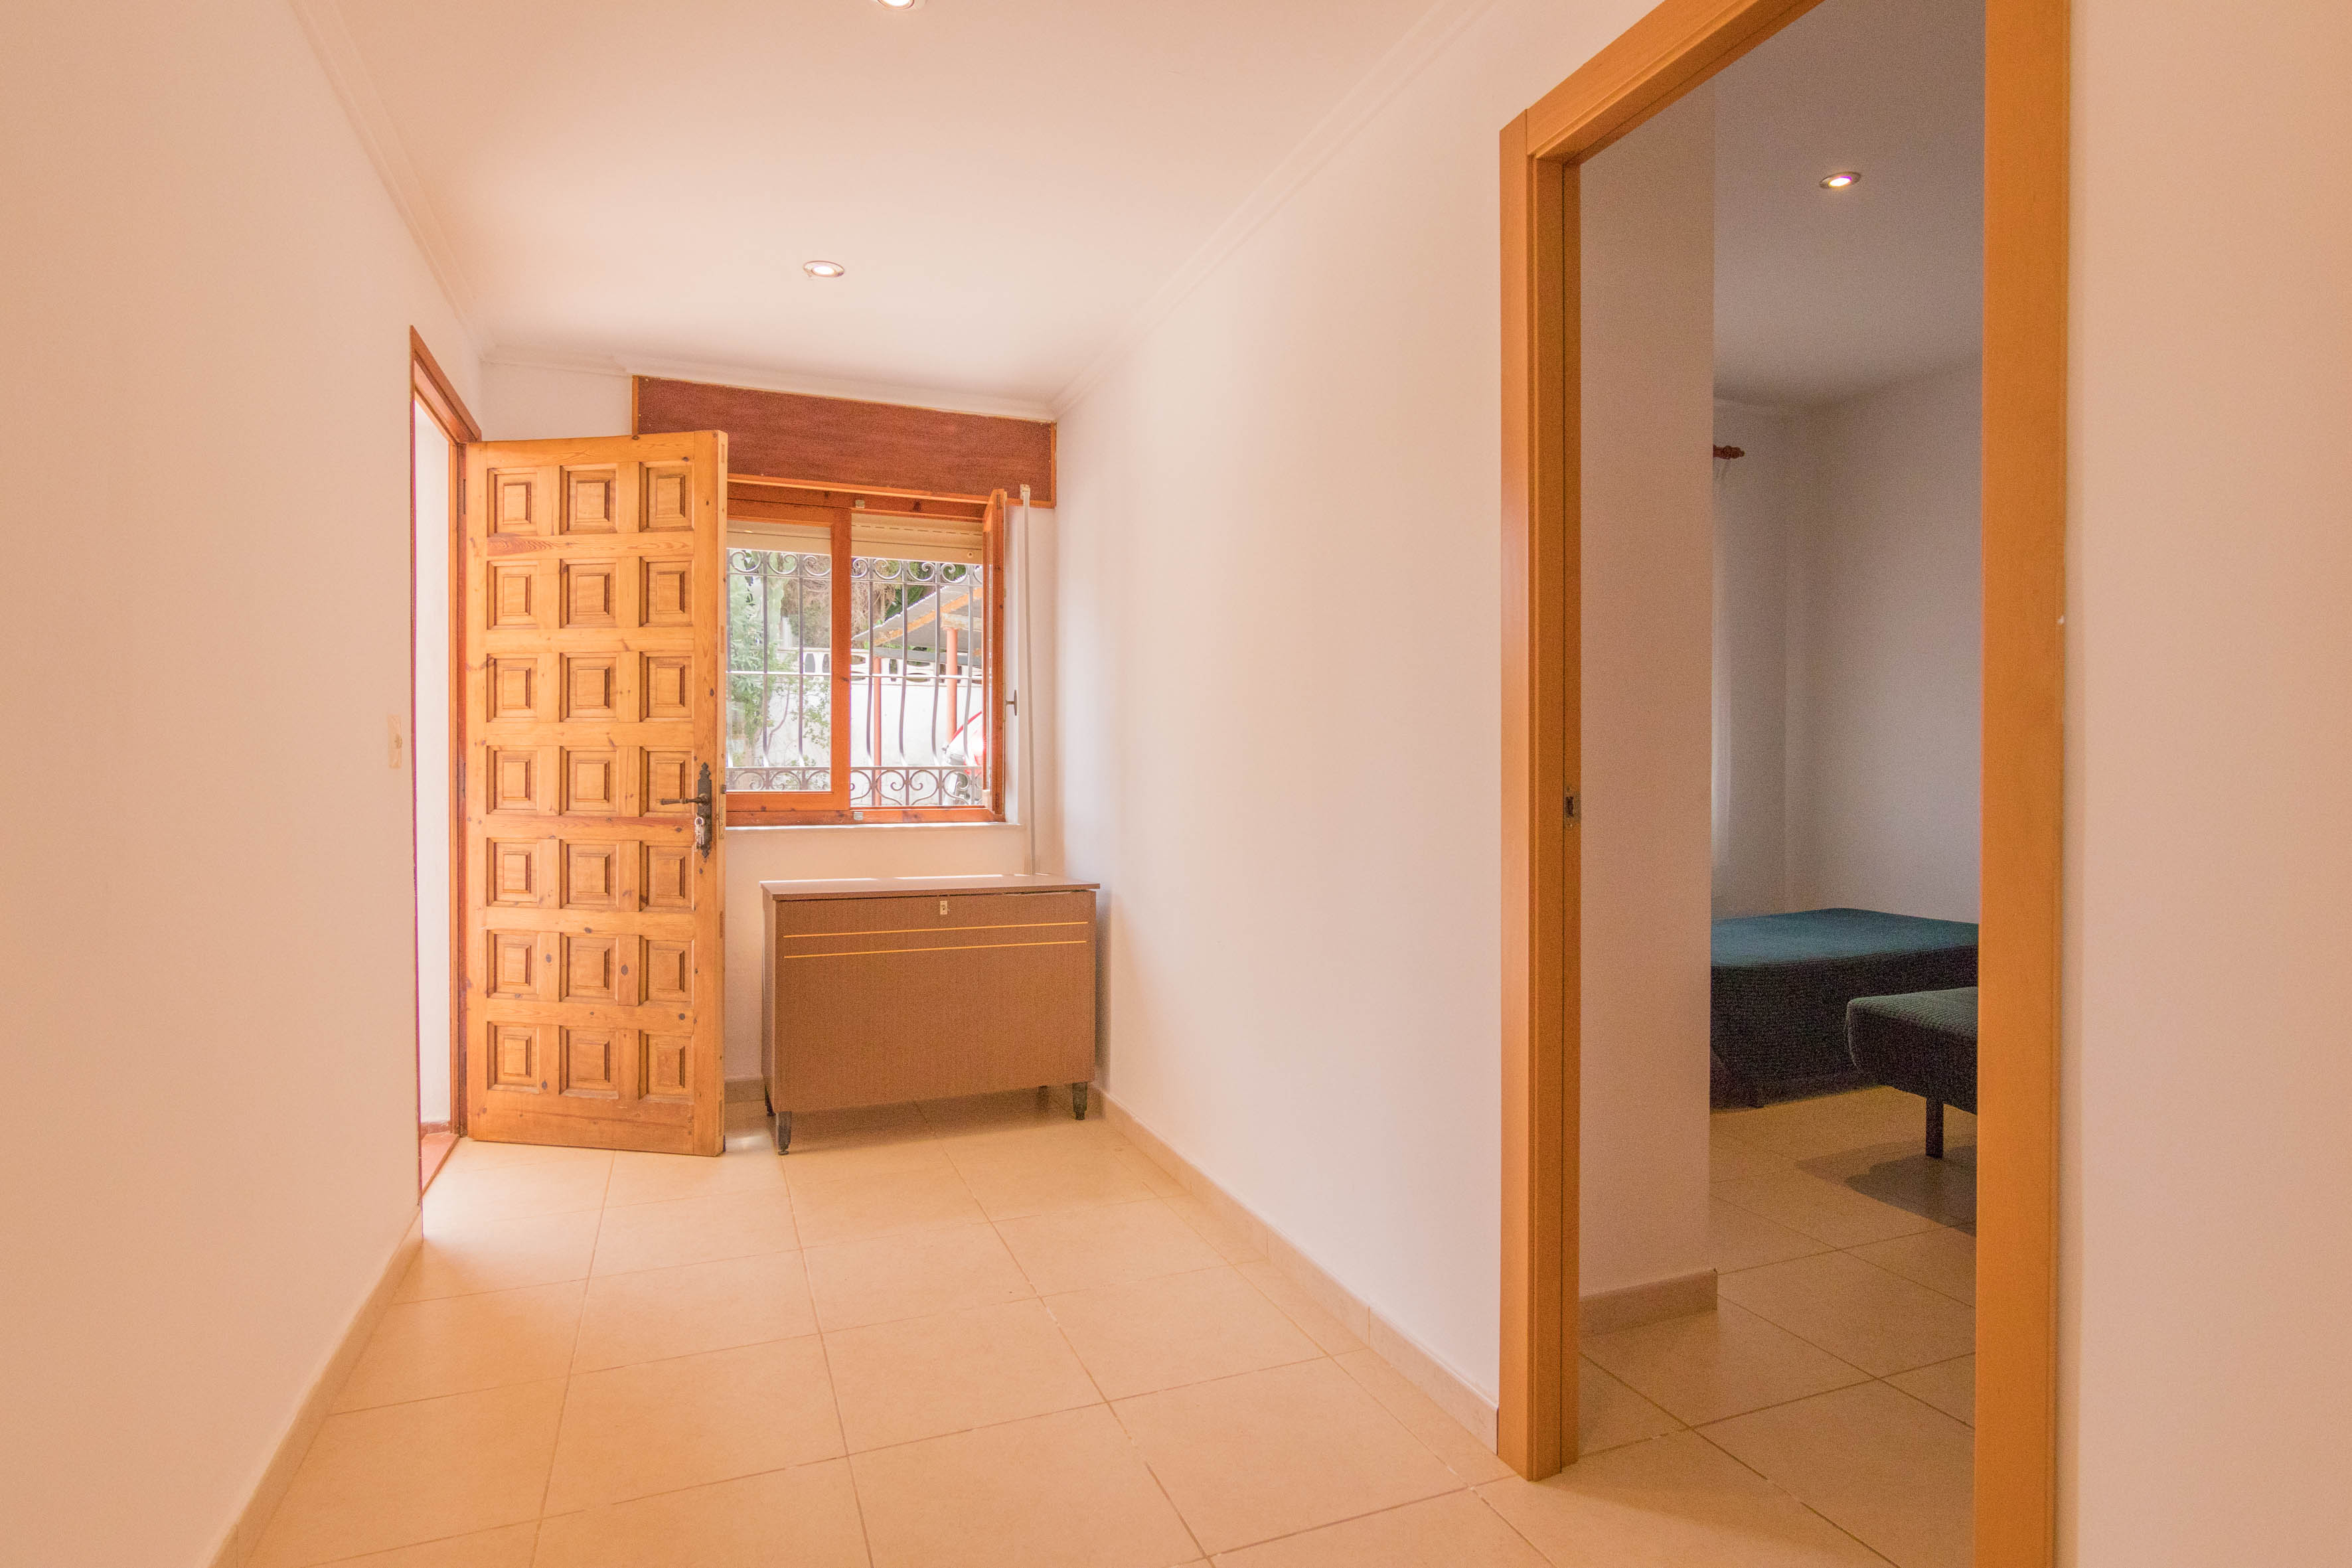 Spacious villa with guest apartment in Las Rotas Denia for sale